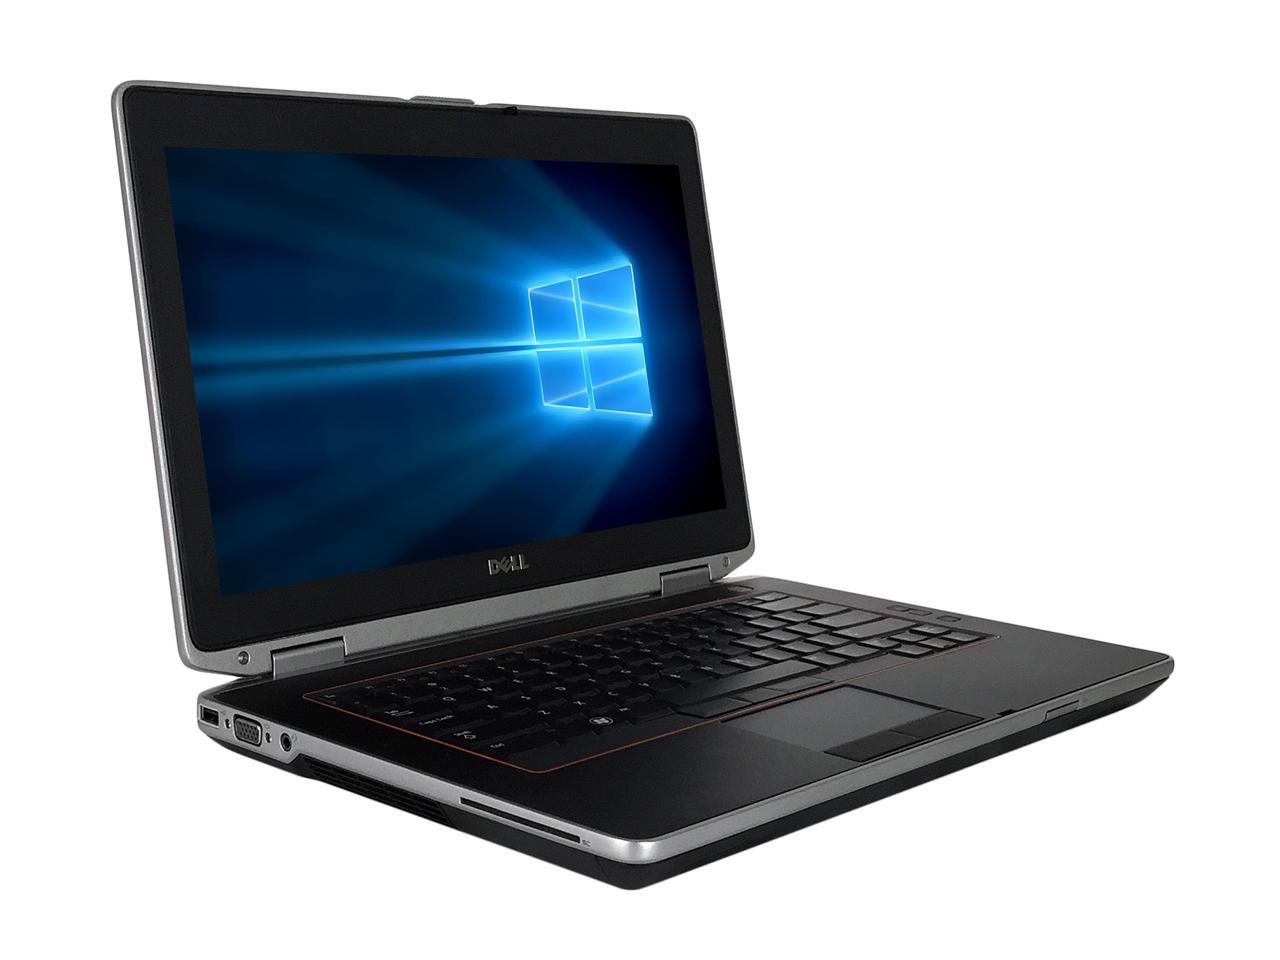 Refurbished Dell Grade A Latitude E6420 14" Laptop, Intel Core I7-2720QM 2.2 GHz, 8GB Memory, 512G SSD, DVD, WIFI, Windows 10 Home 64-bit (Multi-language), 1 Year Warranty